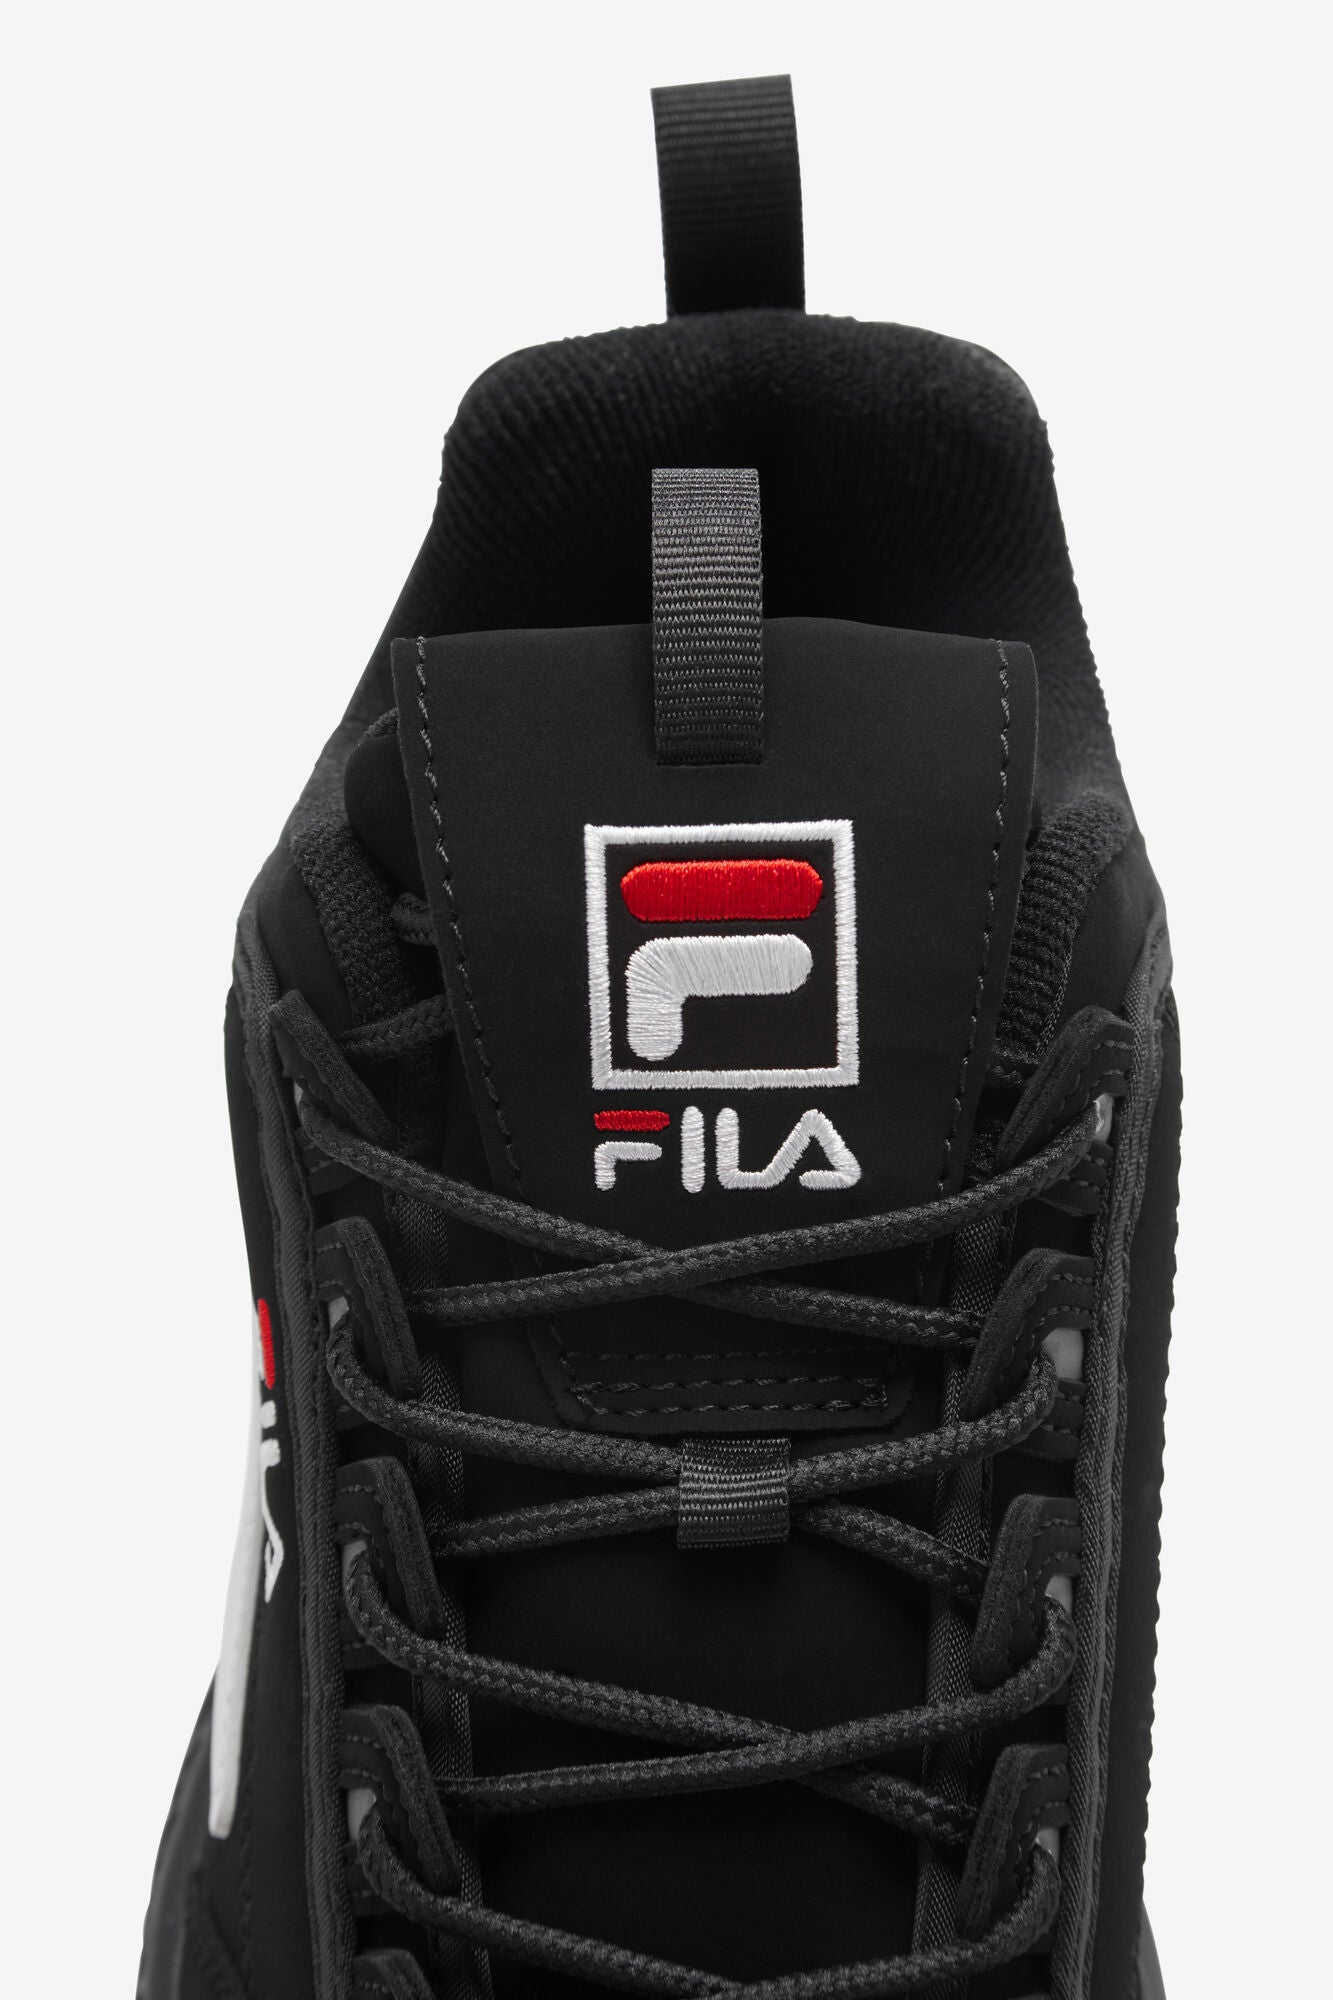 Fila Disruptor II Grade School Shoes Black/White/Red FW04544-014